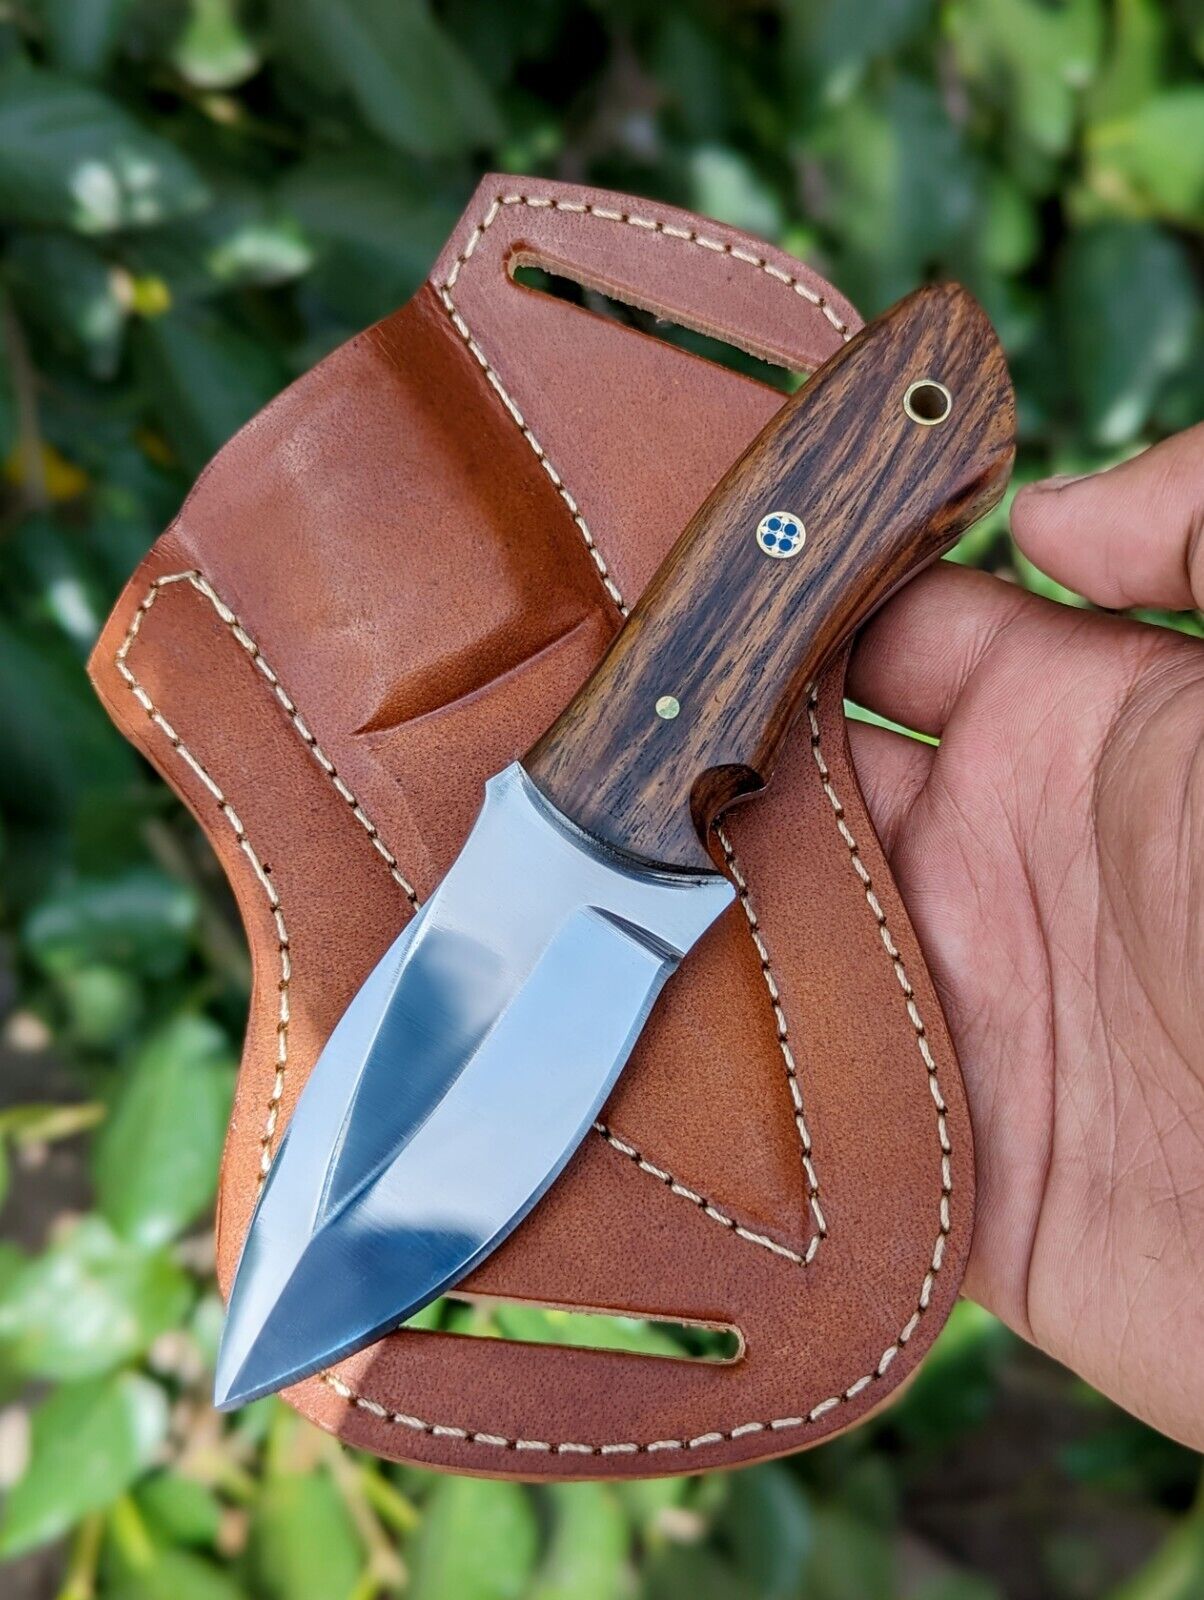 Custom Handmade 1075 Carbon Steel Razor Sharp Blade High Polish Hunting Knife